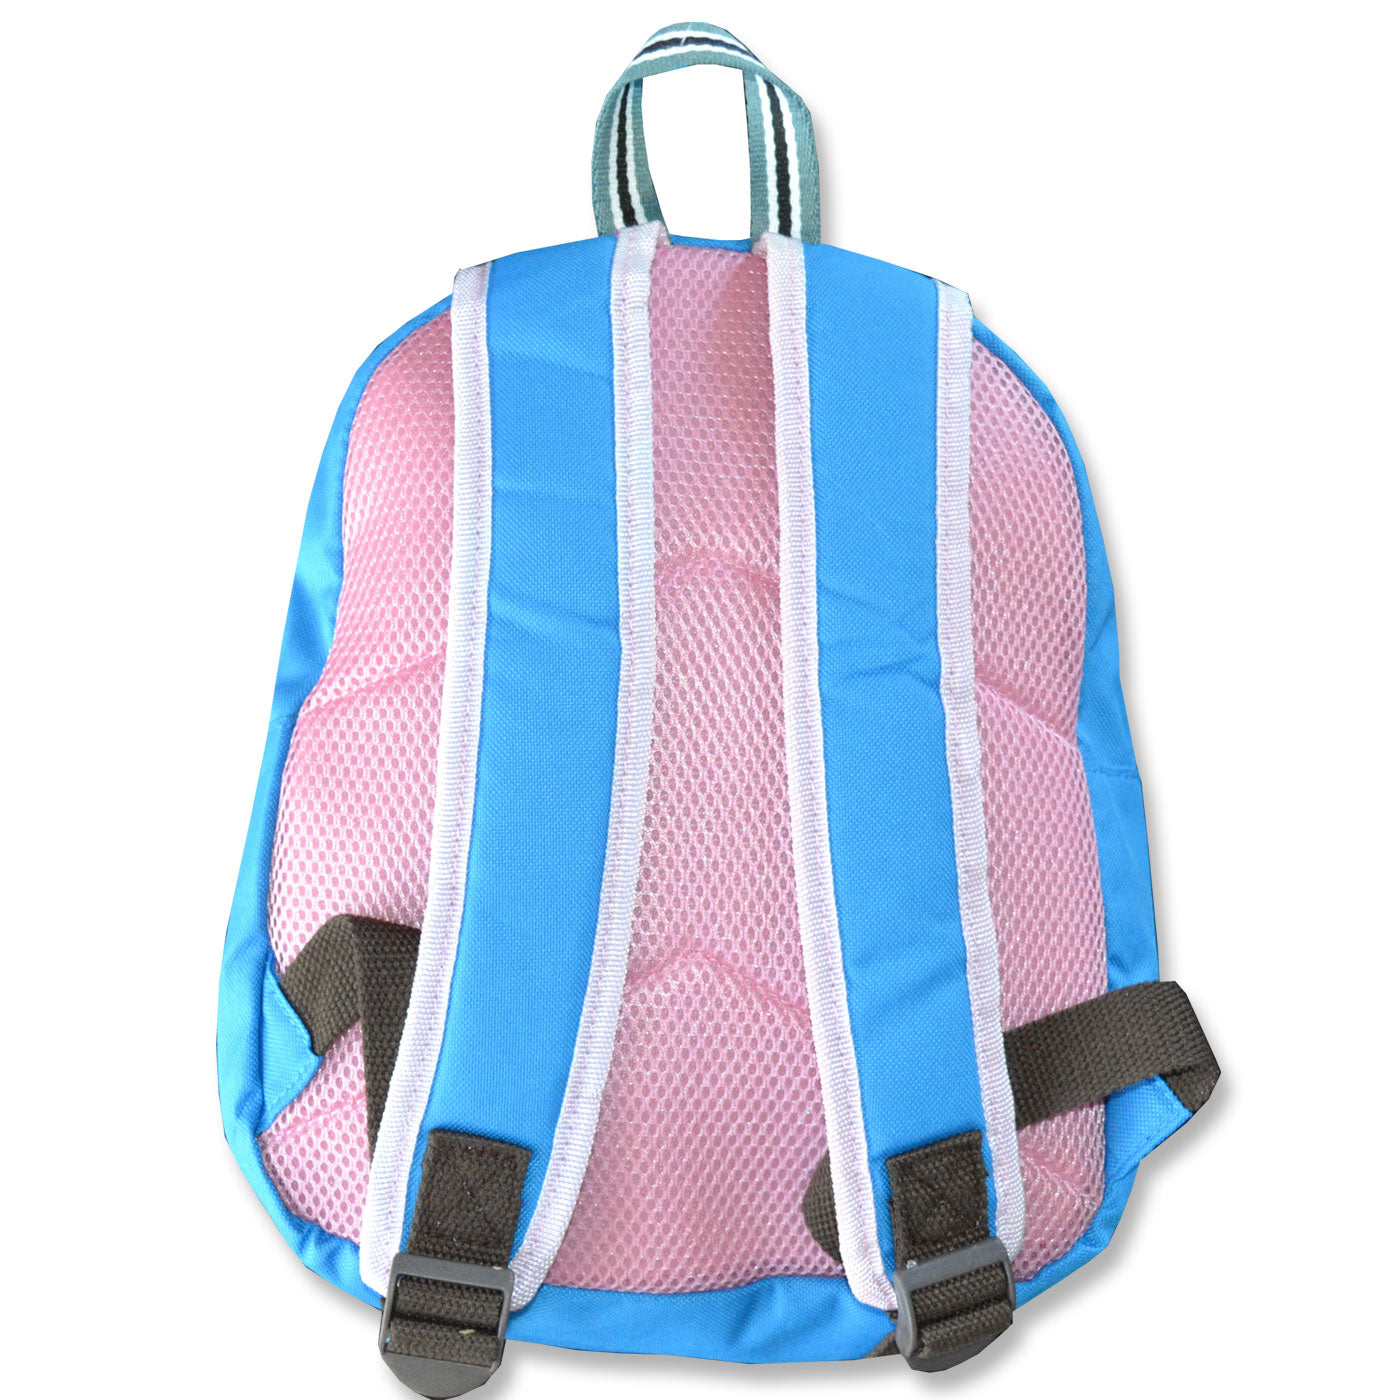 Minakid Backpack Small Blue